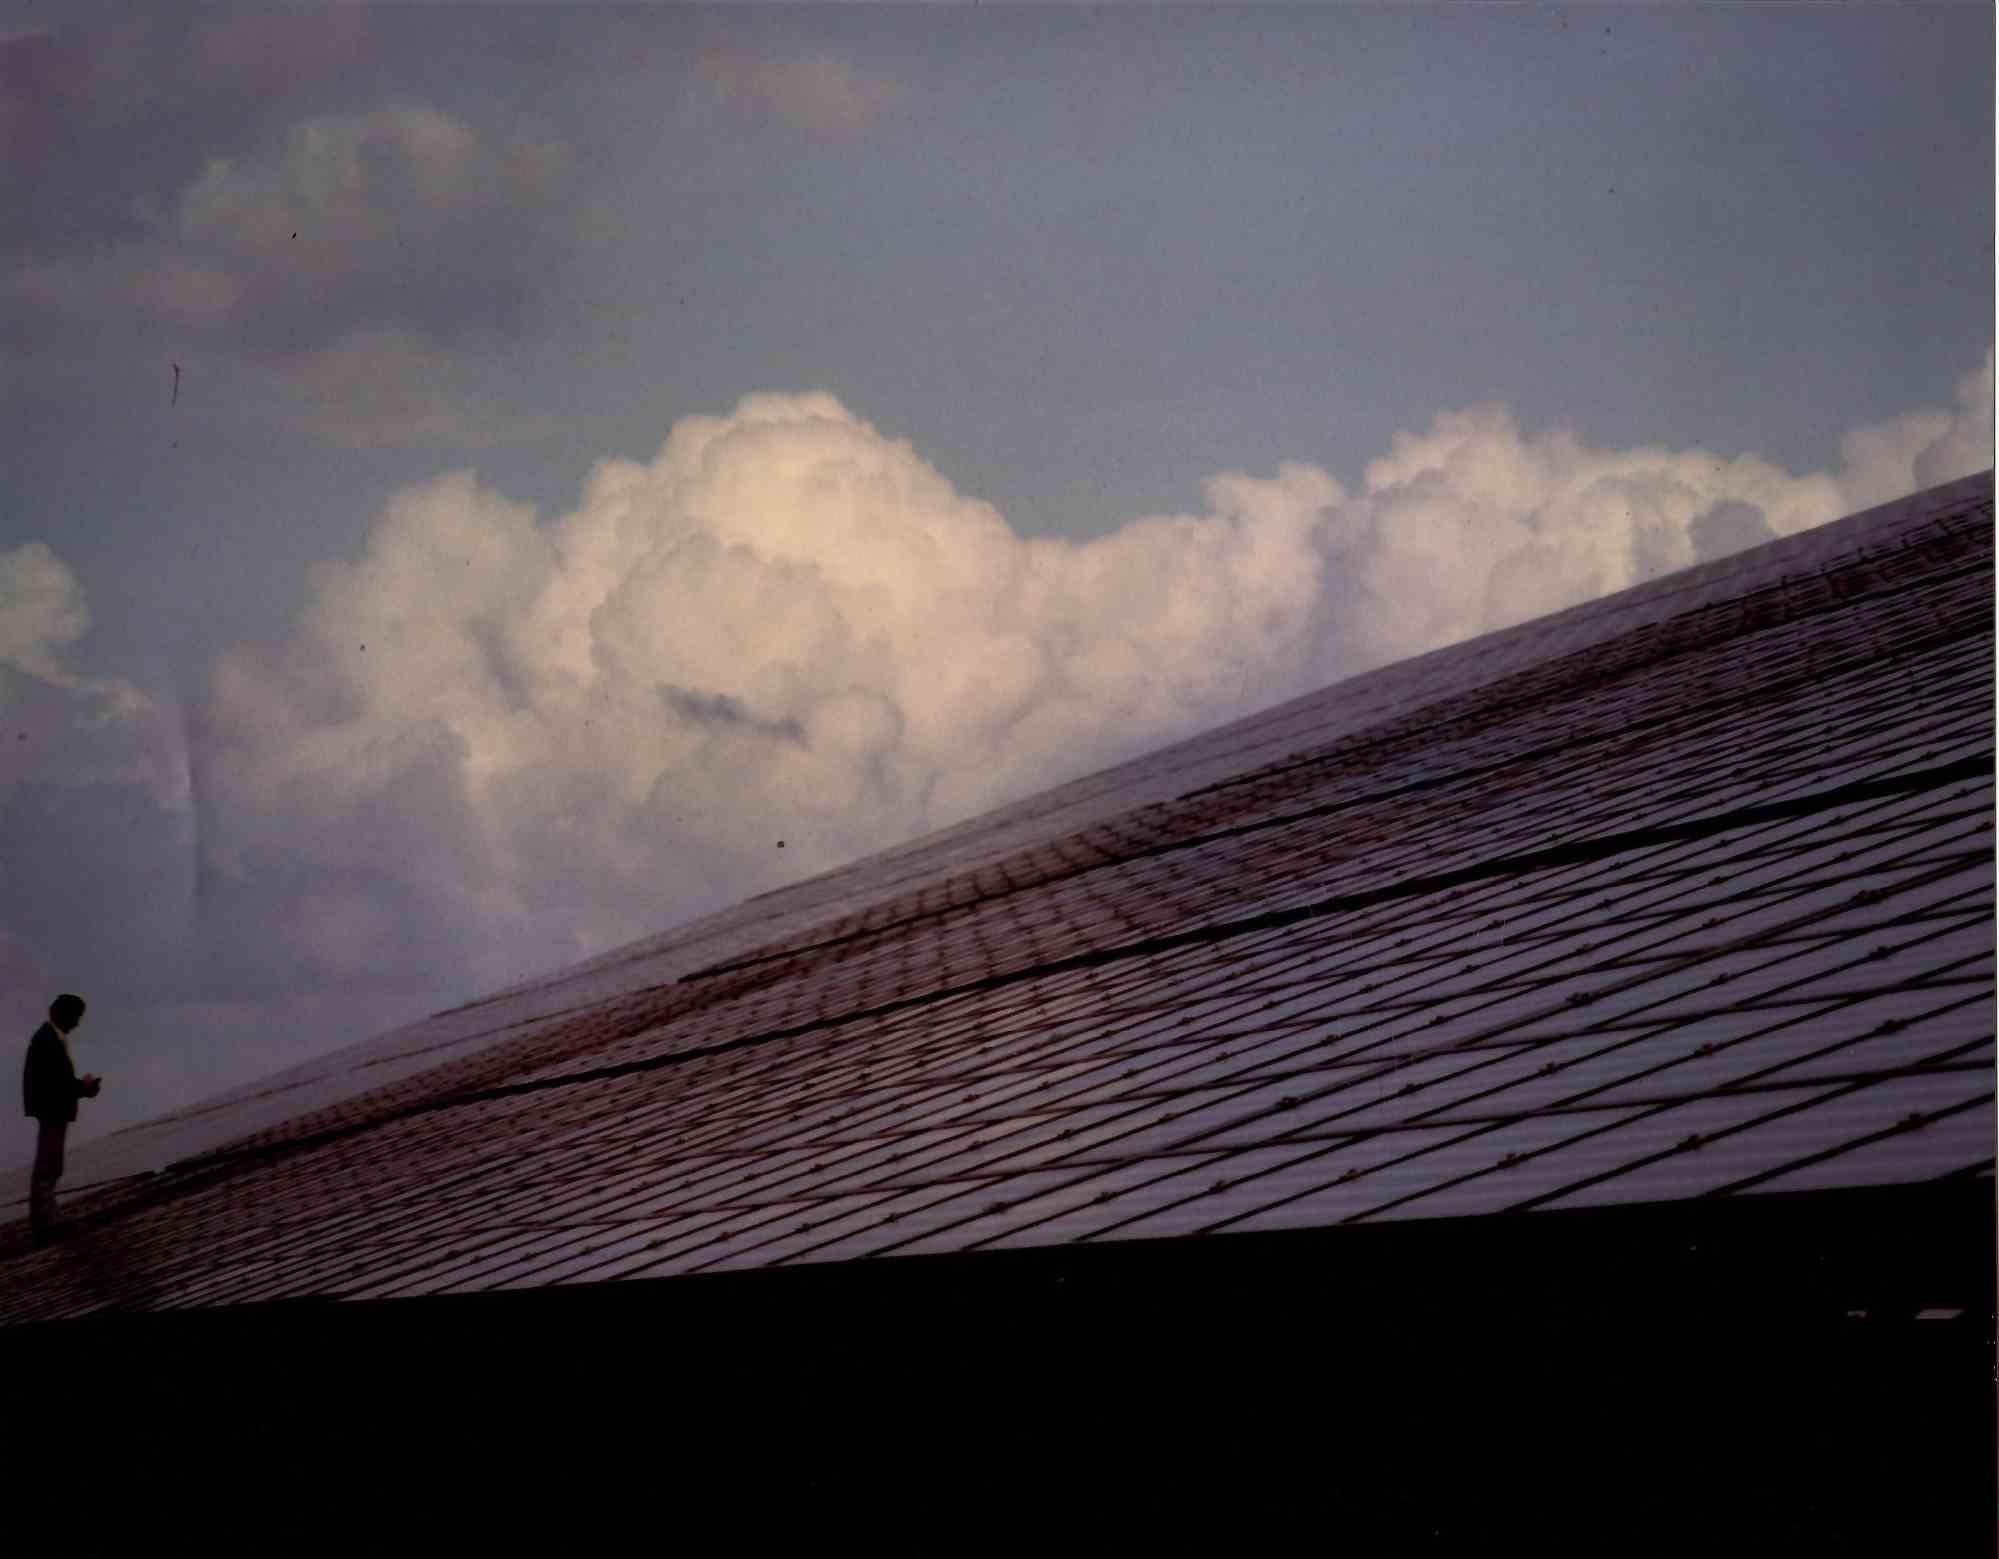 Unknown Landscape Photograph - The First Solar Panels - Vintage Photograph - 1980s